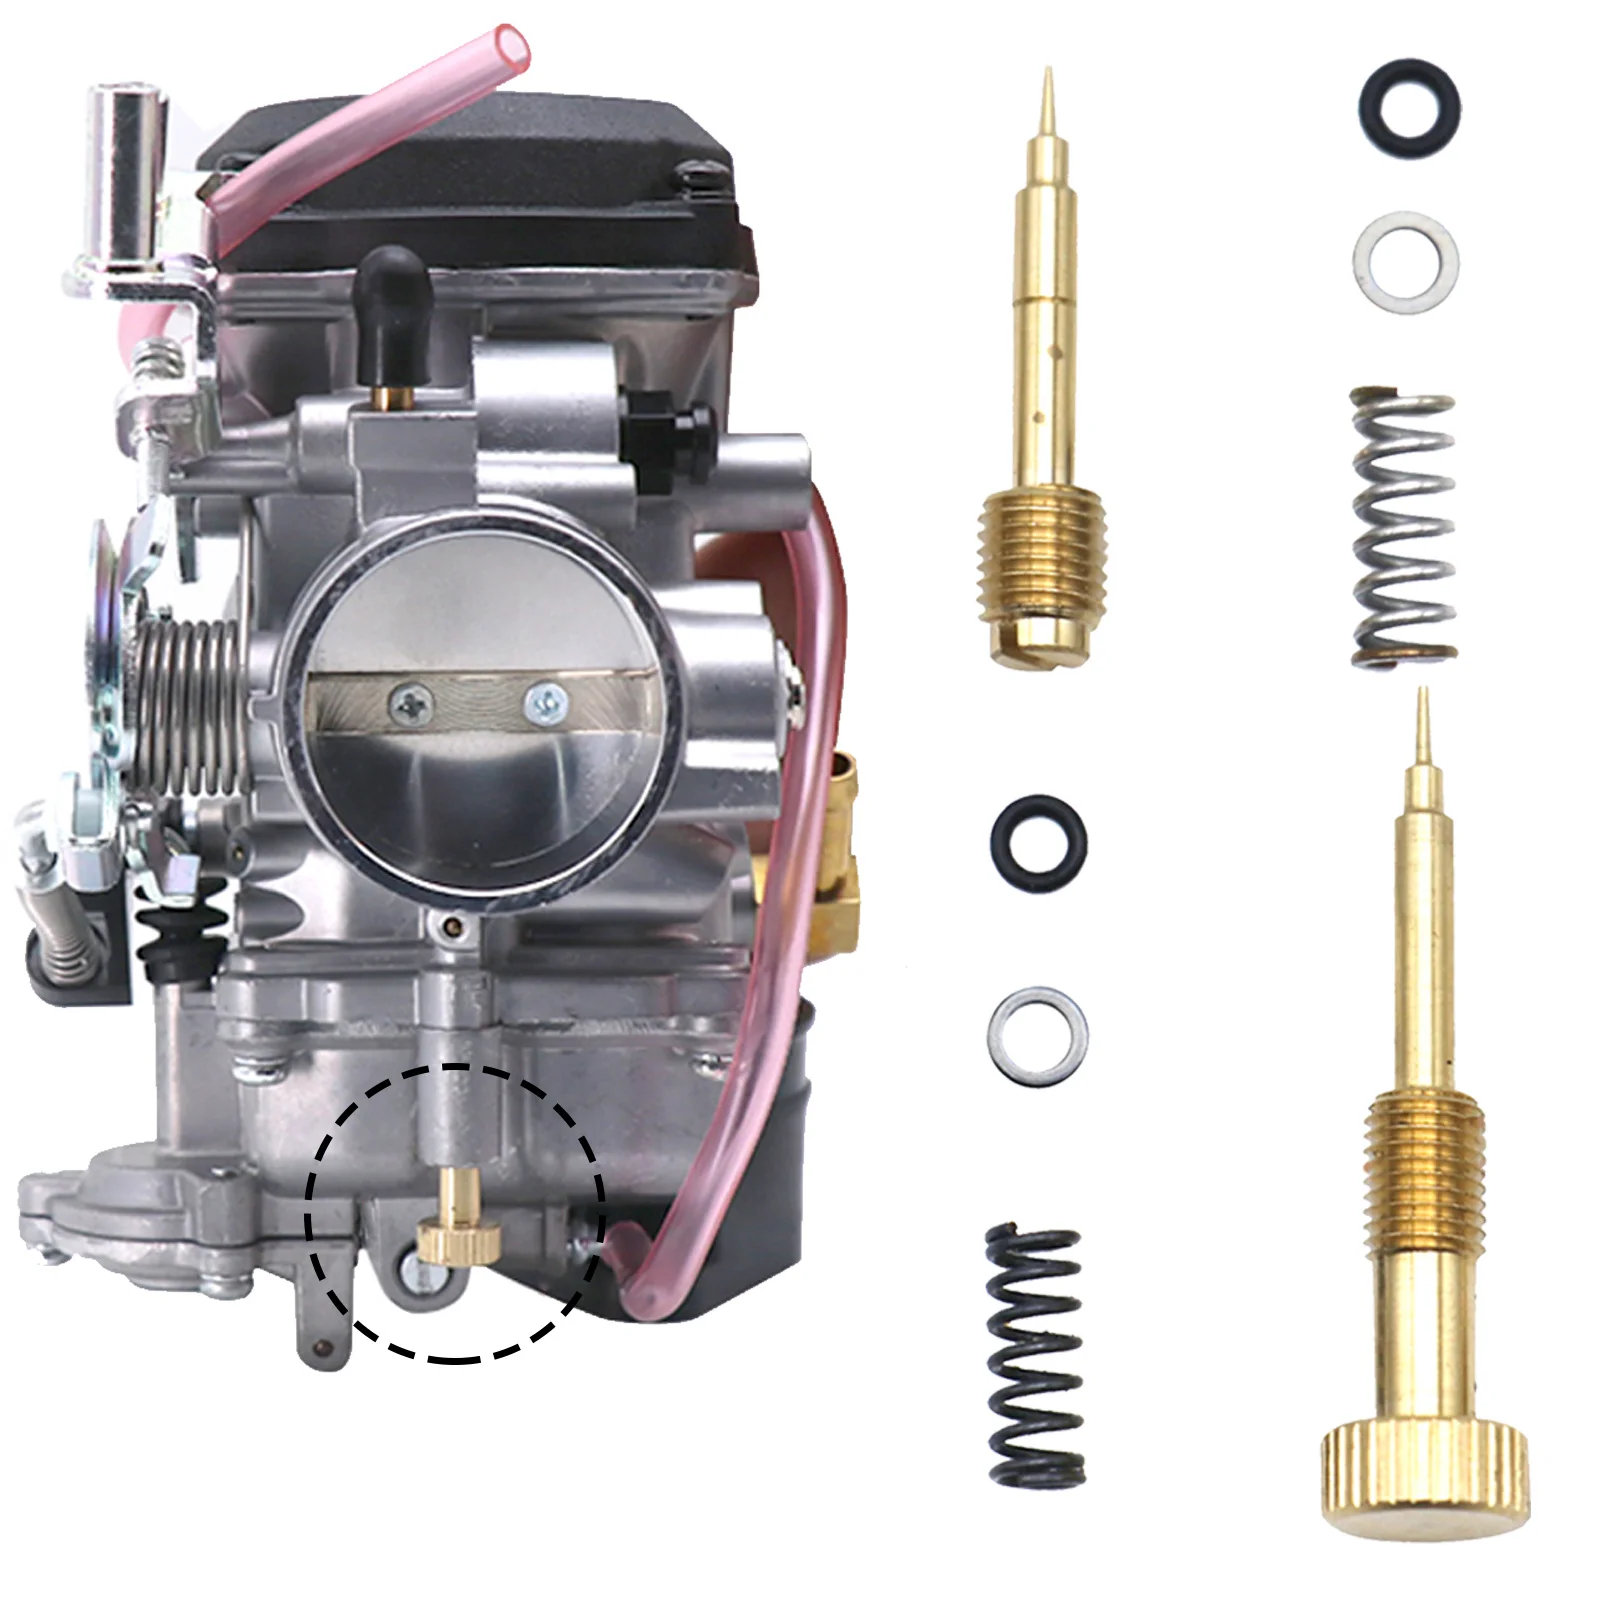 

1PC Motorcycle Carburetor Air Adjusting Screw Idle Mixture Fuel Ratio Screw For Harley CV40 Keihin CVK34 CVK36 CVK40